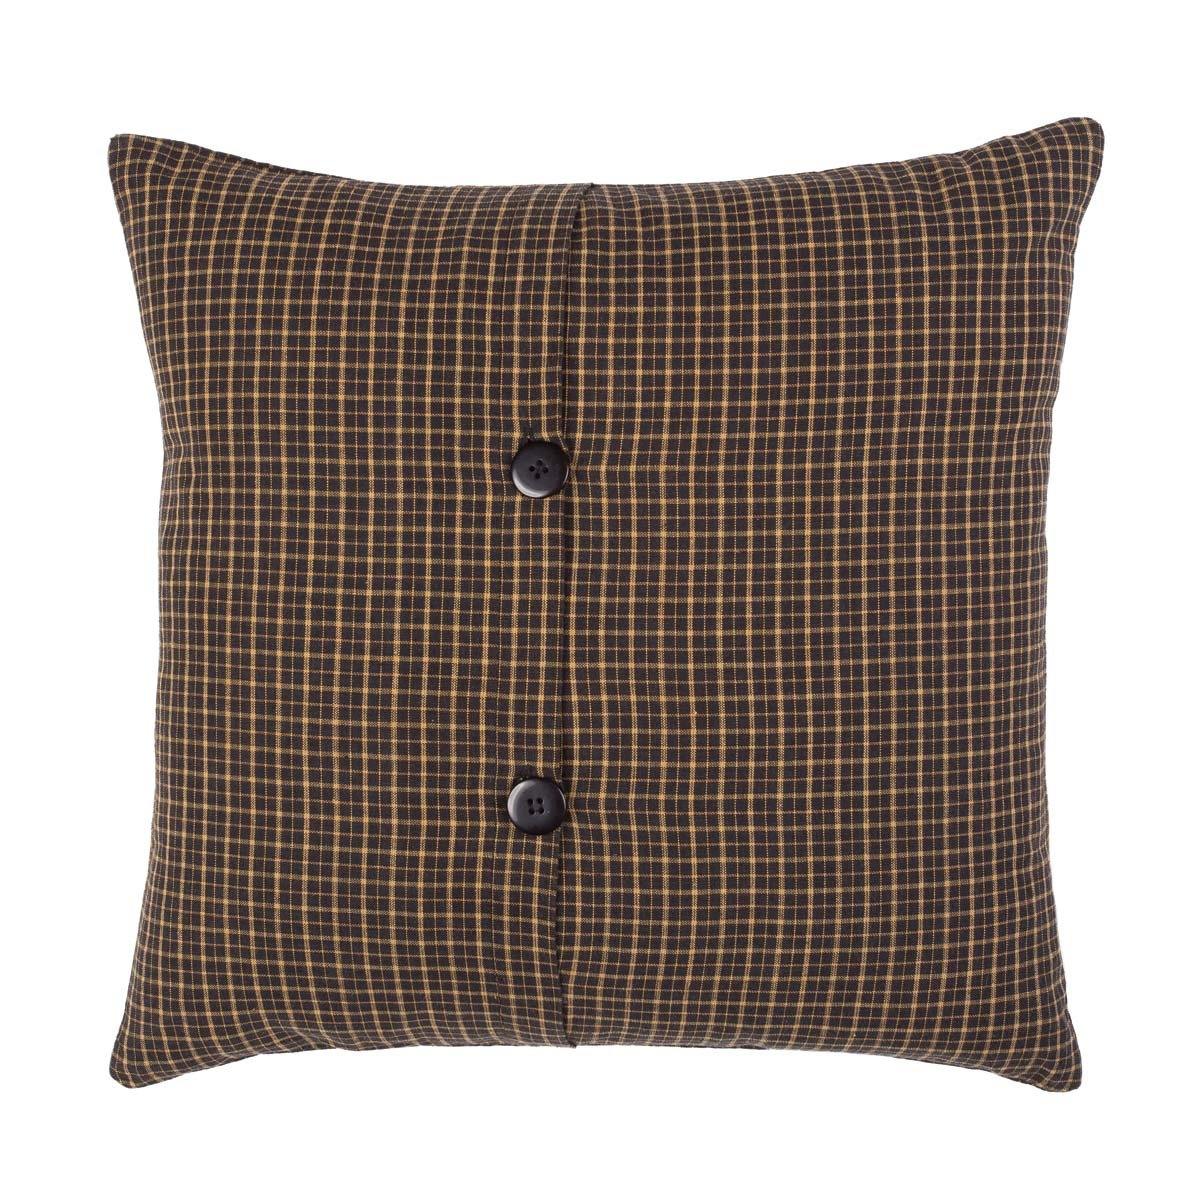 Kettle Grove Pillow Fabric 16x16 - The Fox Decor